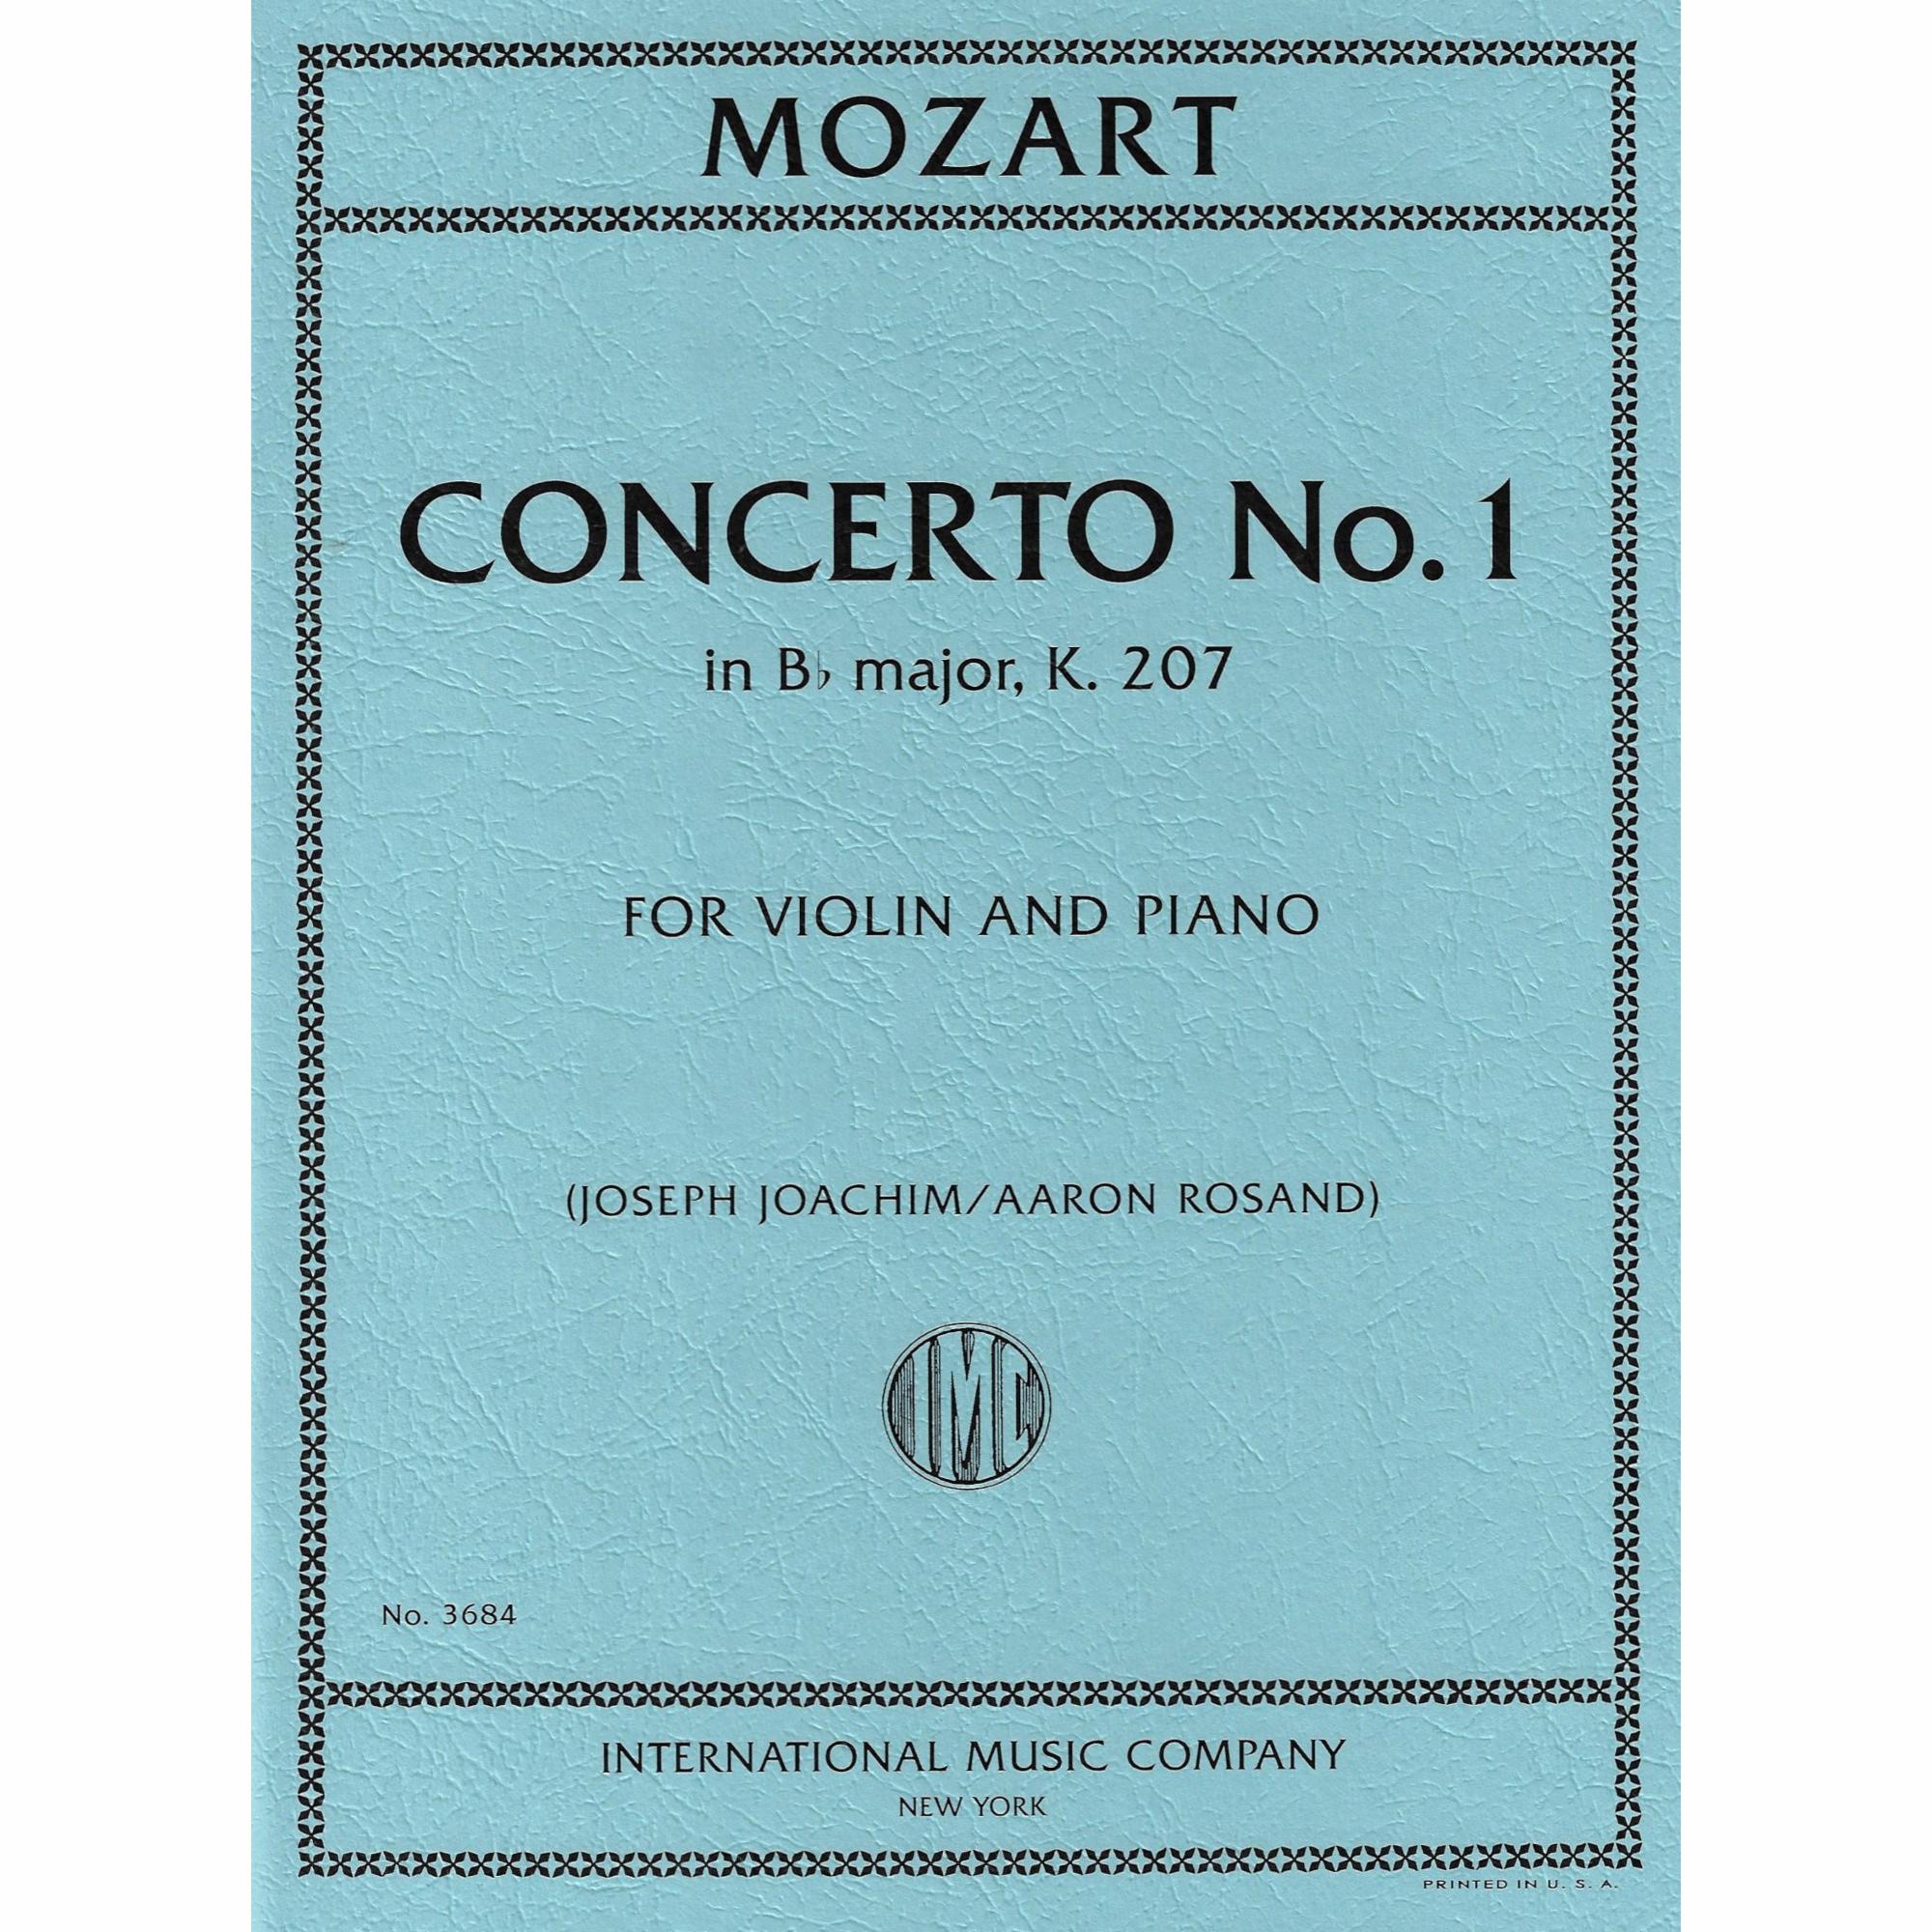 Mozart -- Concerto No. 1 in B-flat Major, K. 207 for Violin and Piano